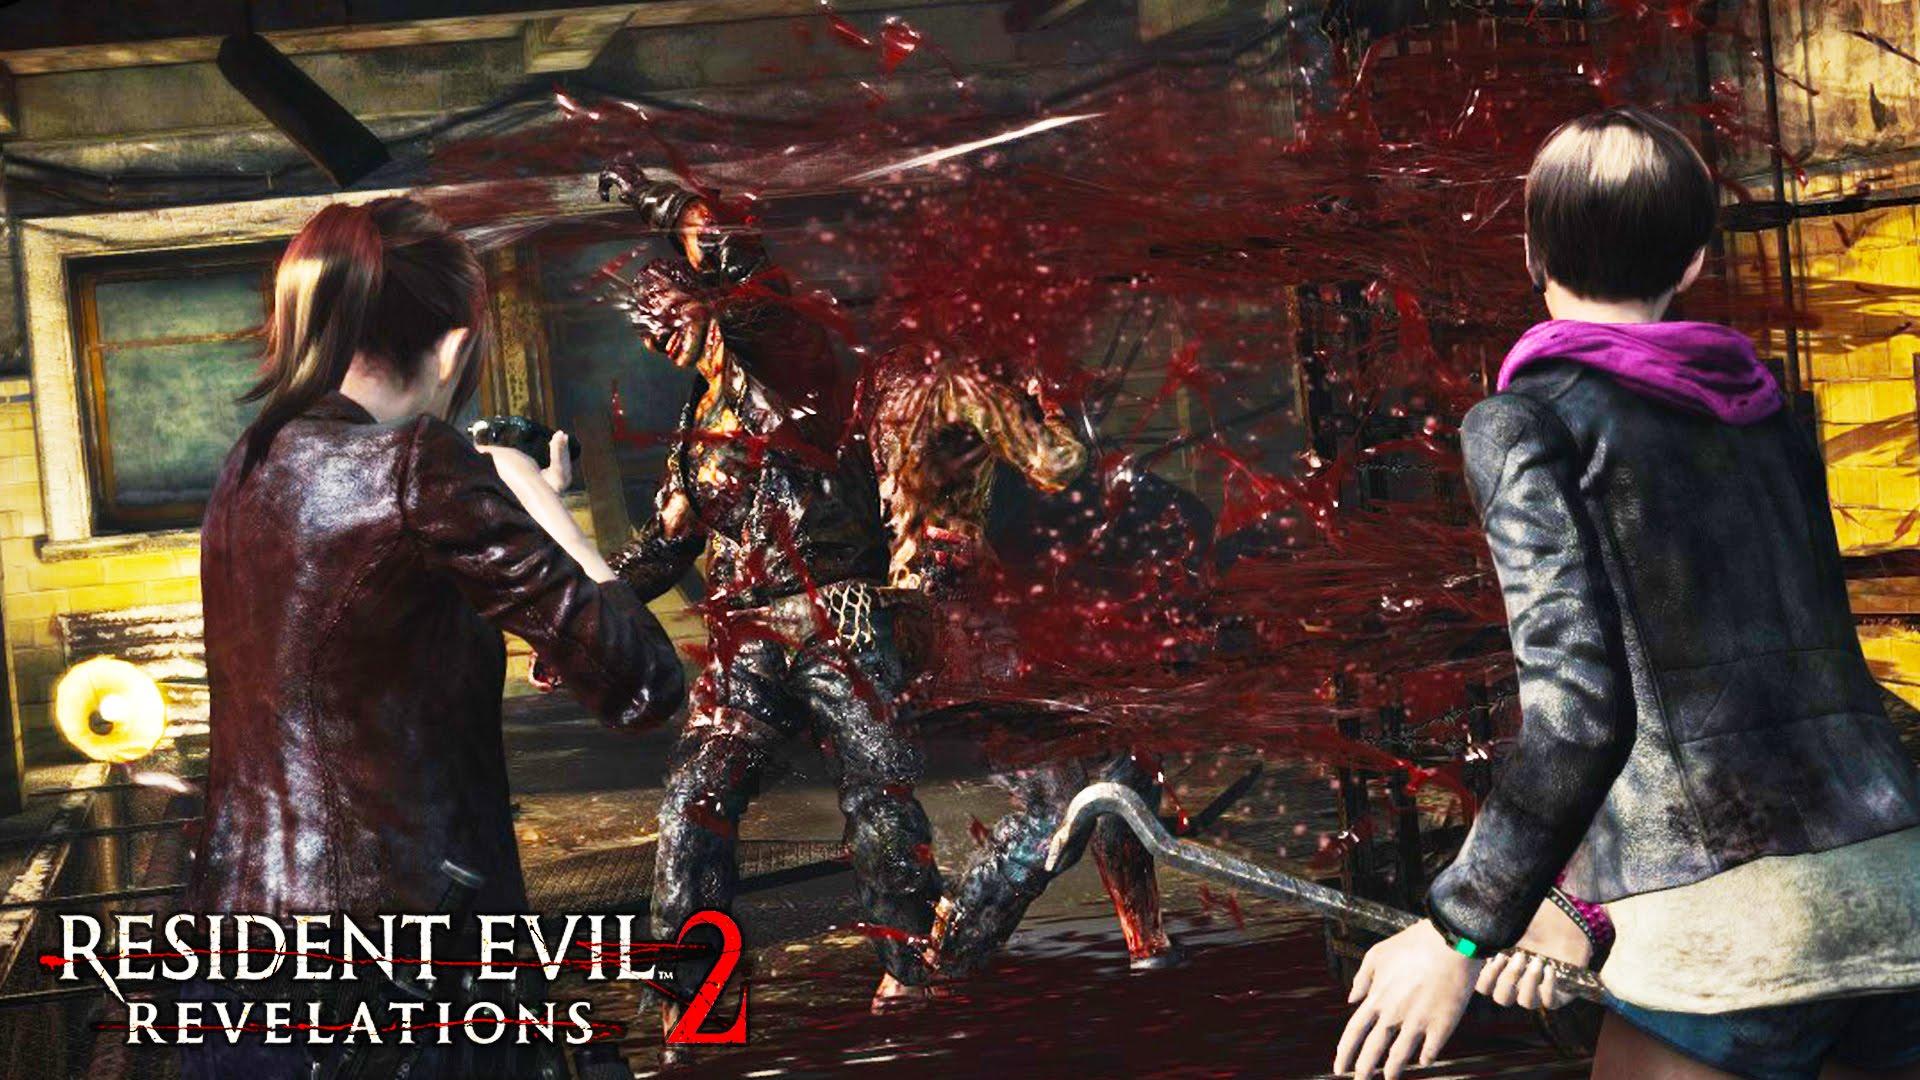 Resident Evil: Revelations 2 HD Wallpaper and Background